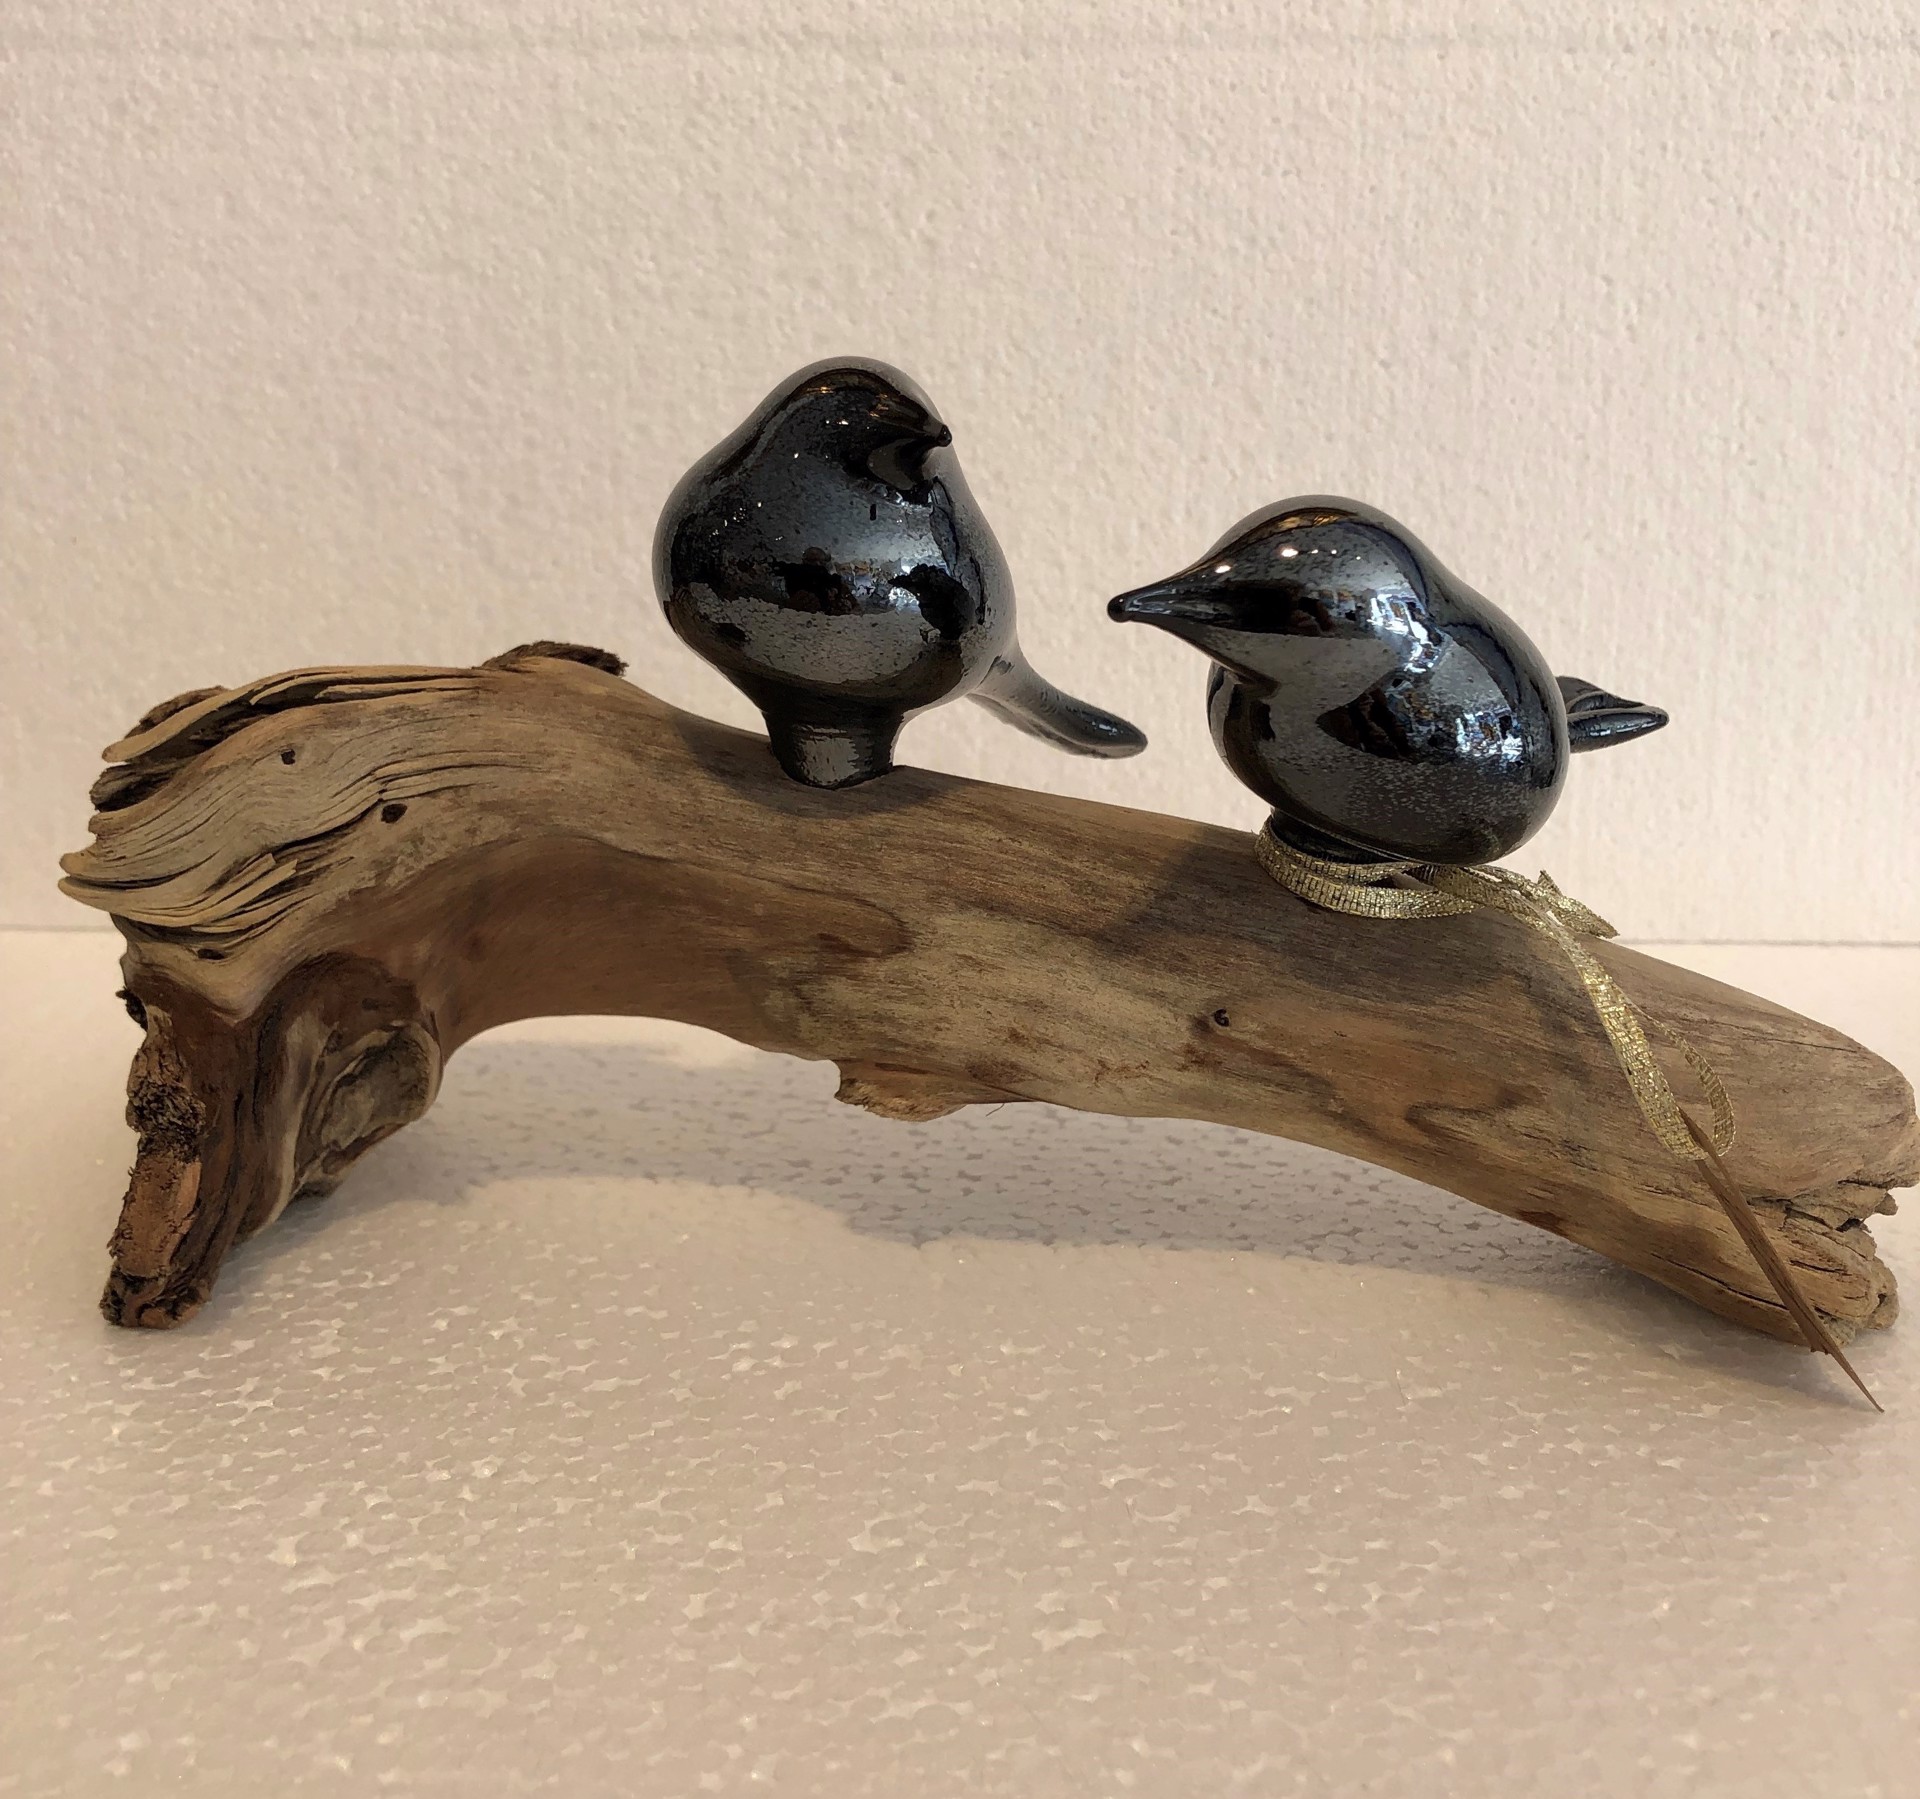 2 Black Birds #2 by Carol Nesbitt